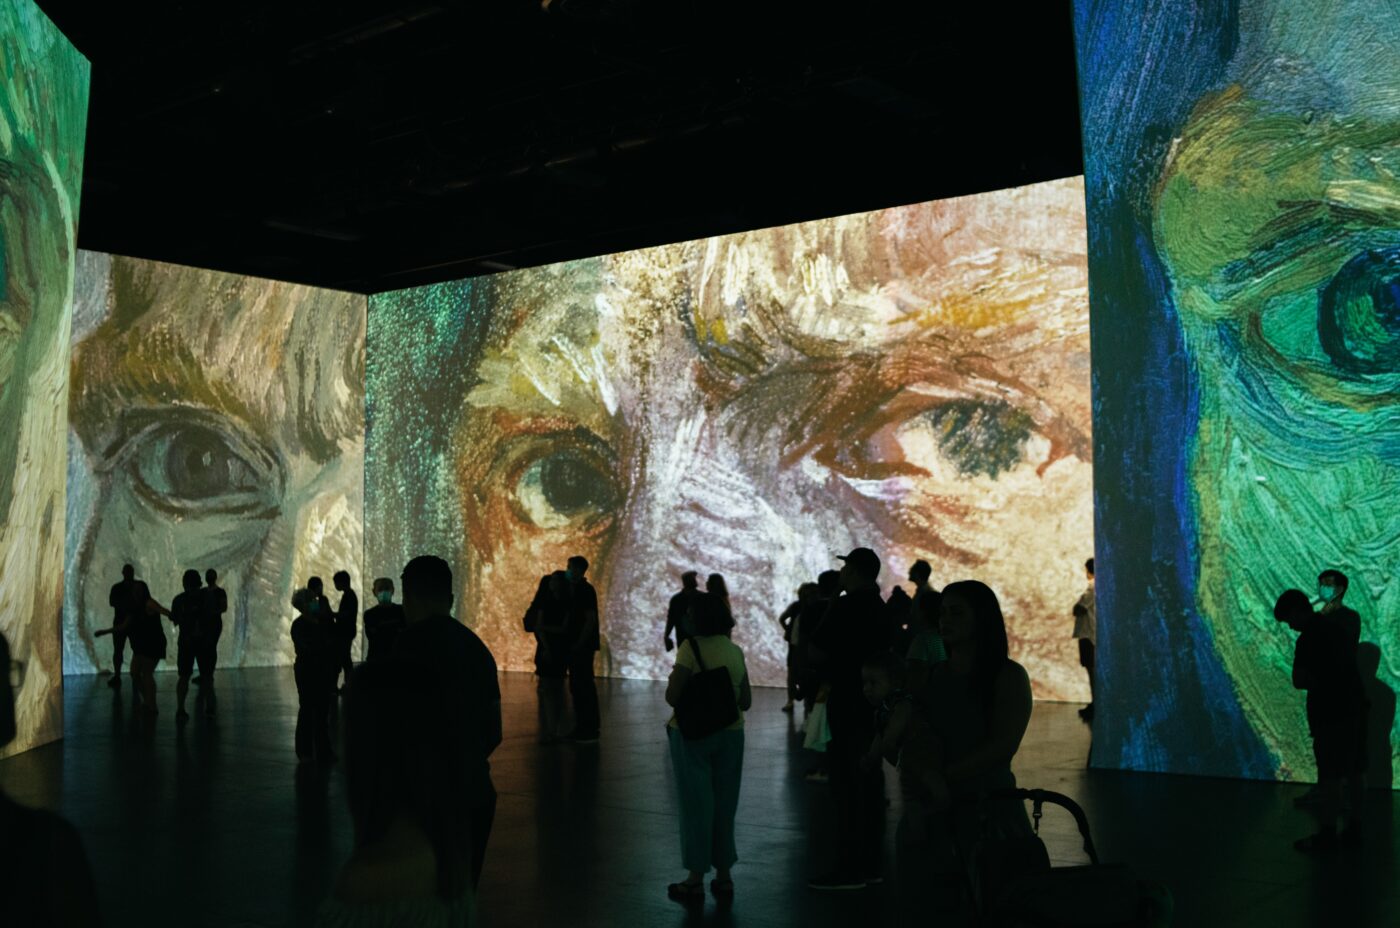 Projected art immersive experience showcasing Van Goeh